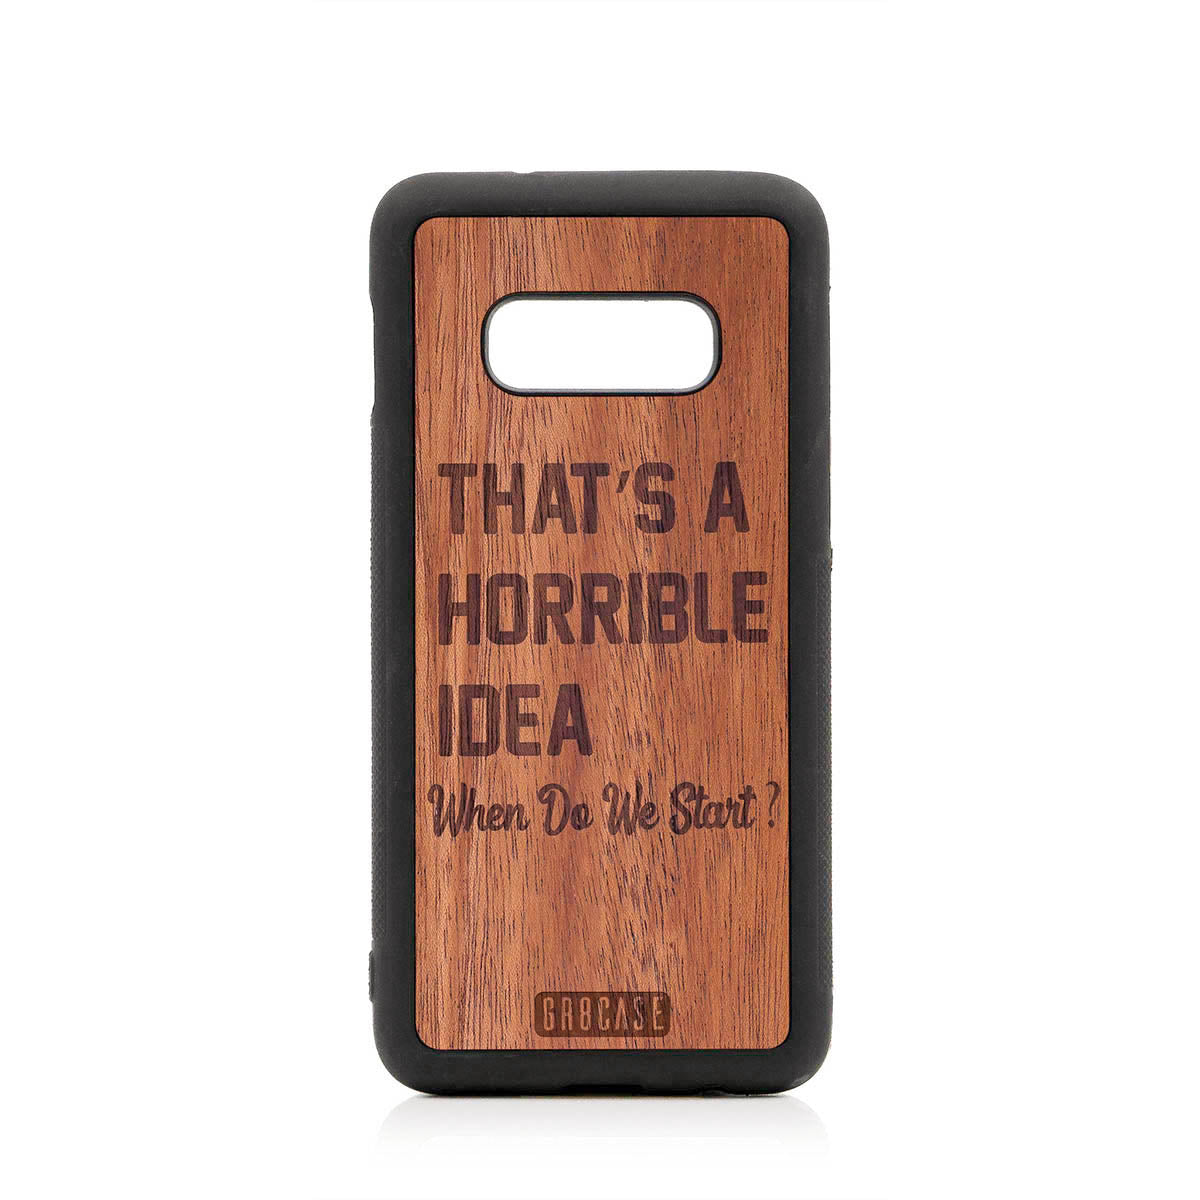 That's A Horrible Idea When Do We Start? Design Wood Case For Samsung Galaxy S10E